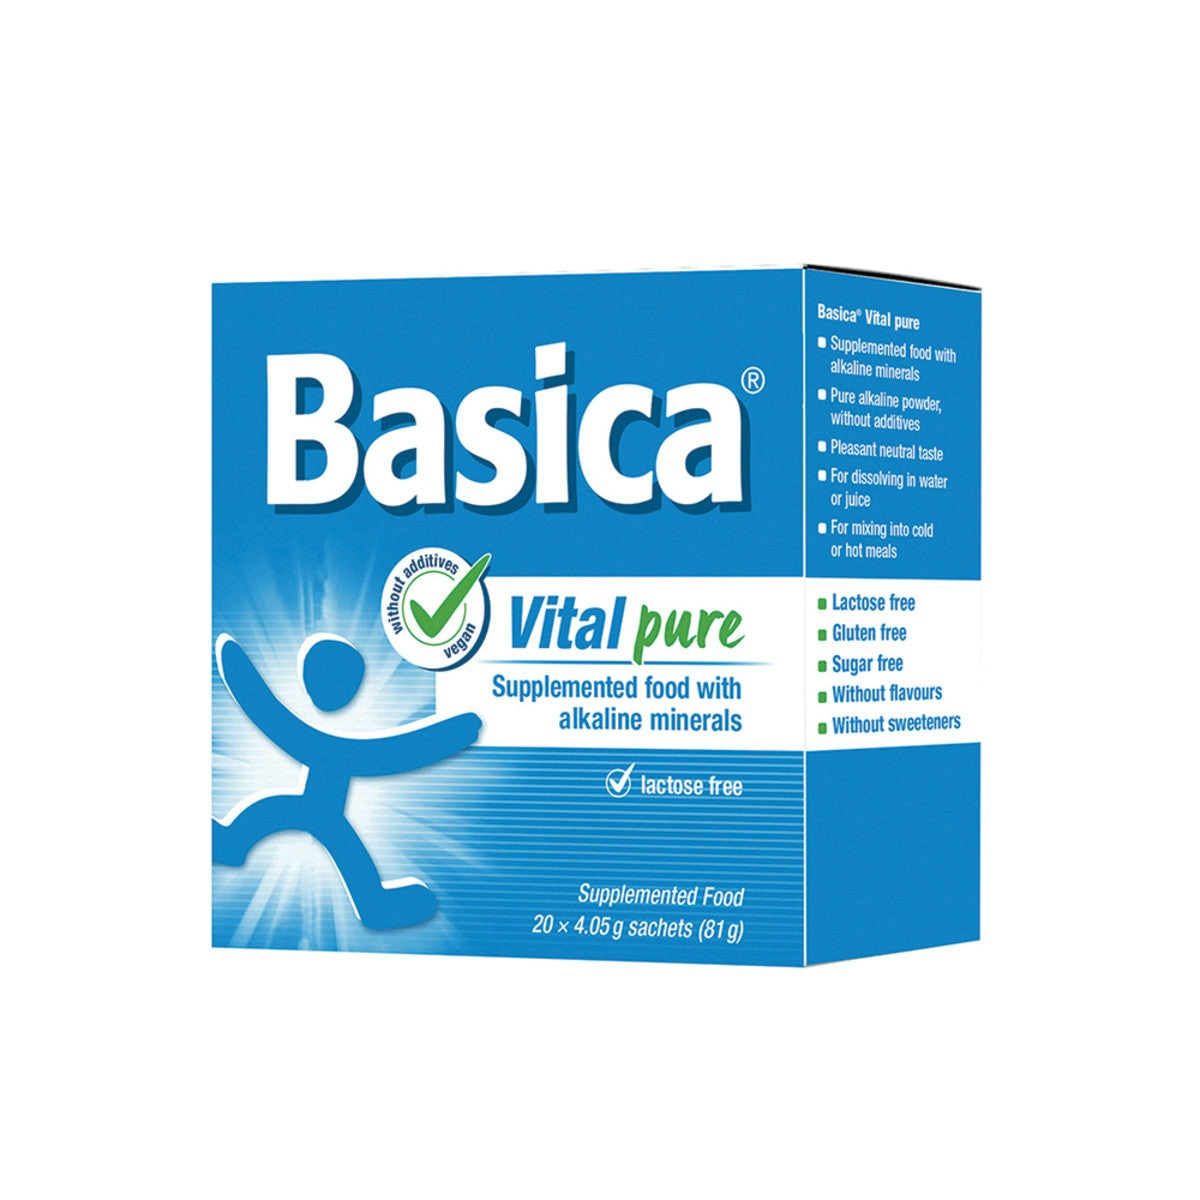 Image ofBio-Practica Basica Vital Pure Sachets 4.05g x 20 Pack on white background